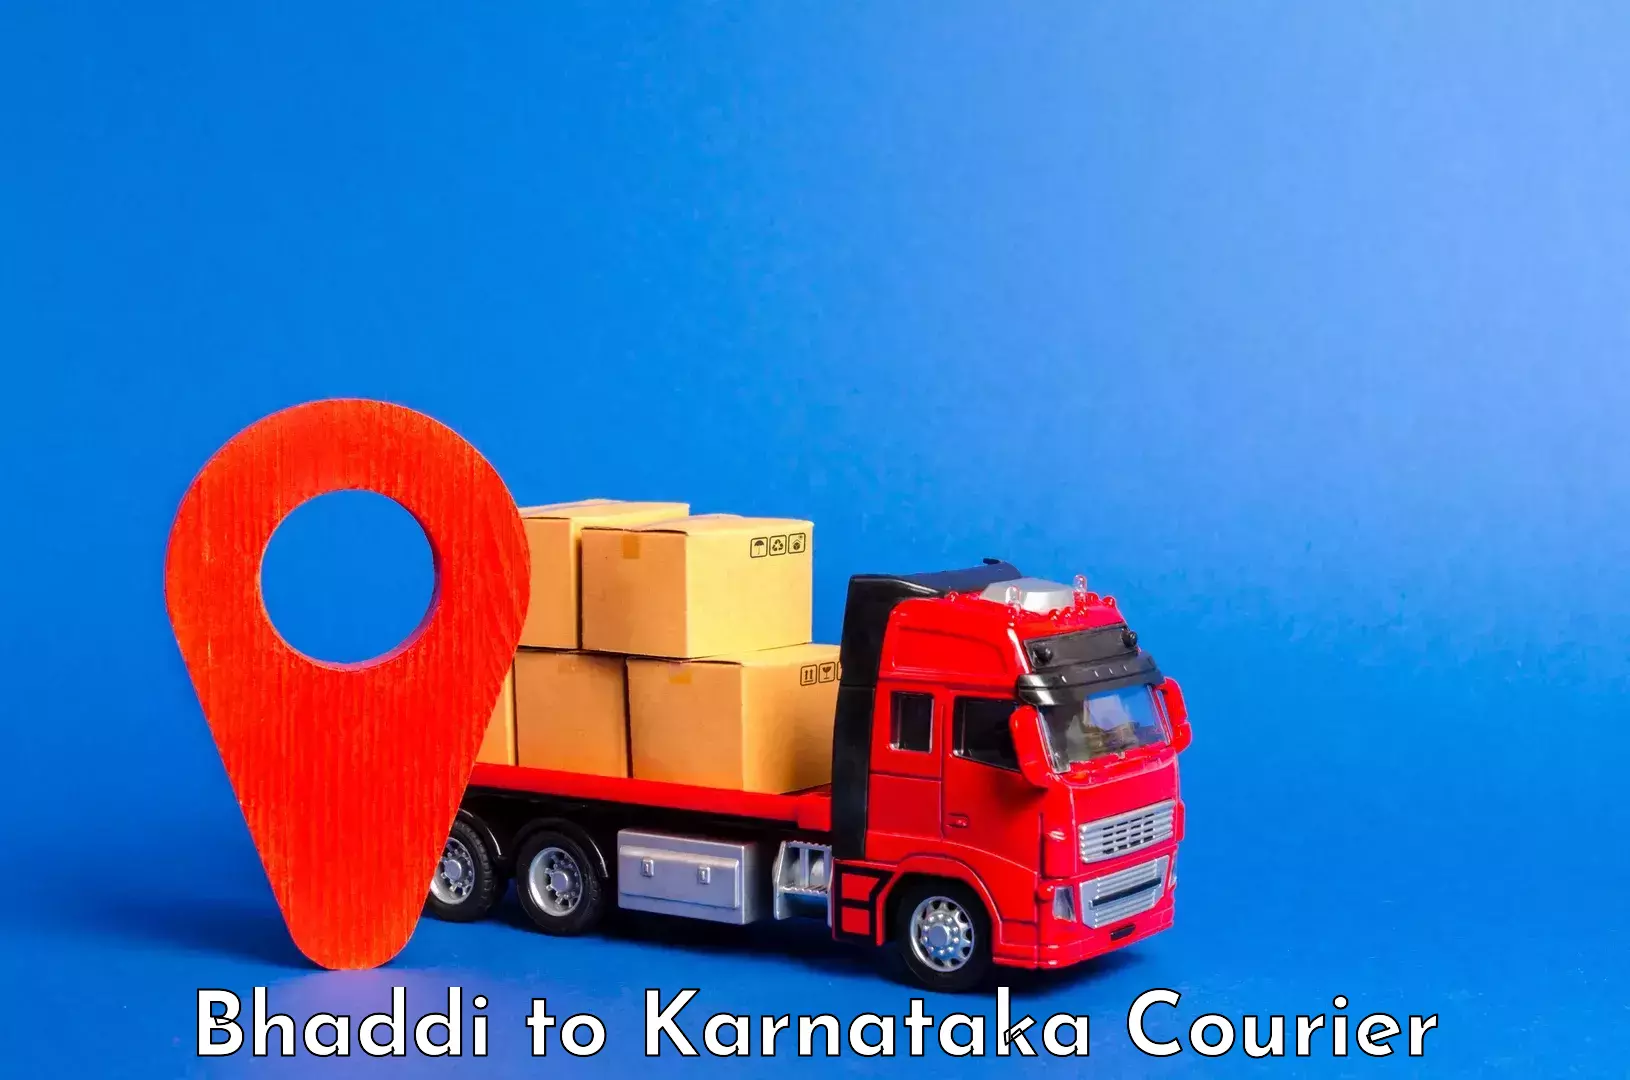 Luggage transport consulting Bhaddi to Karnataka